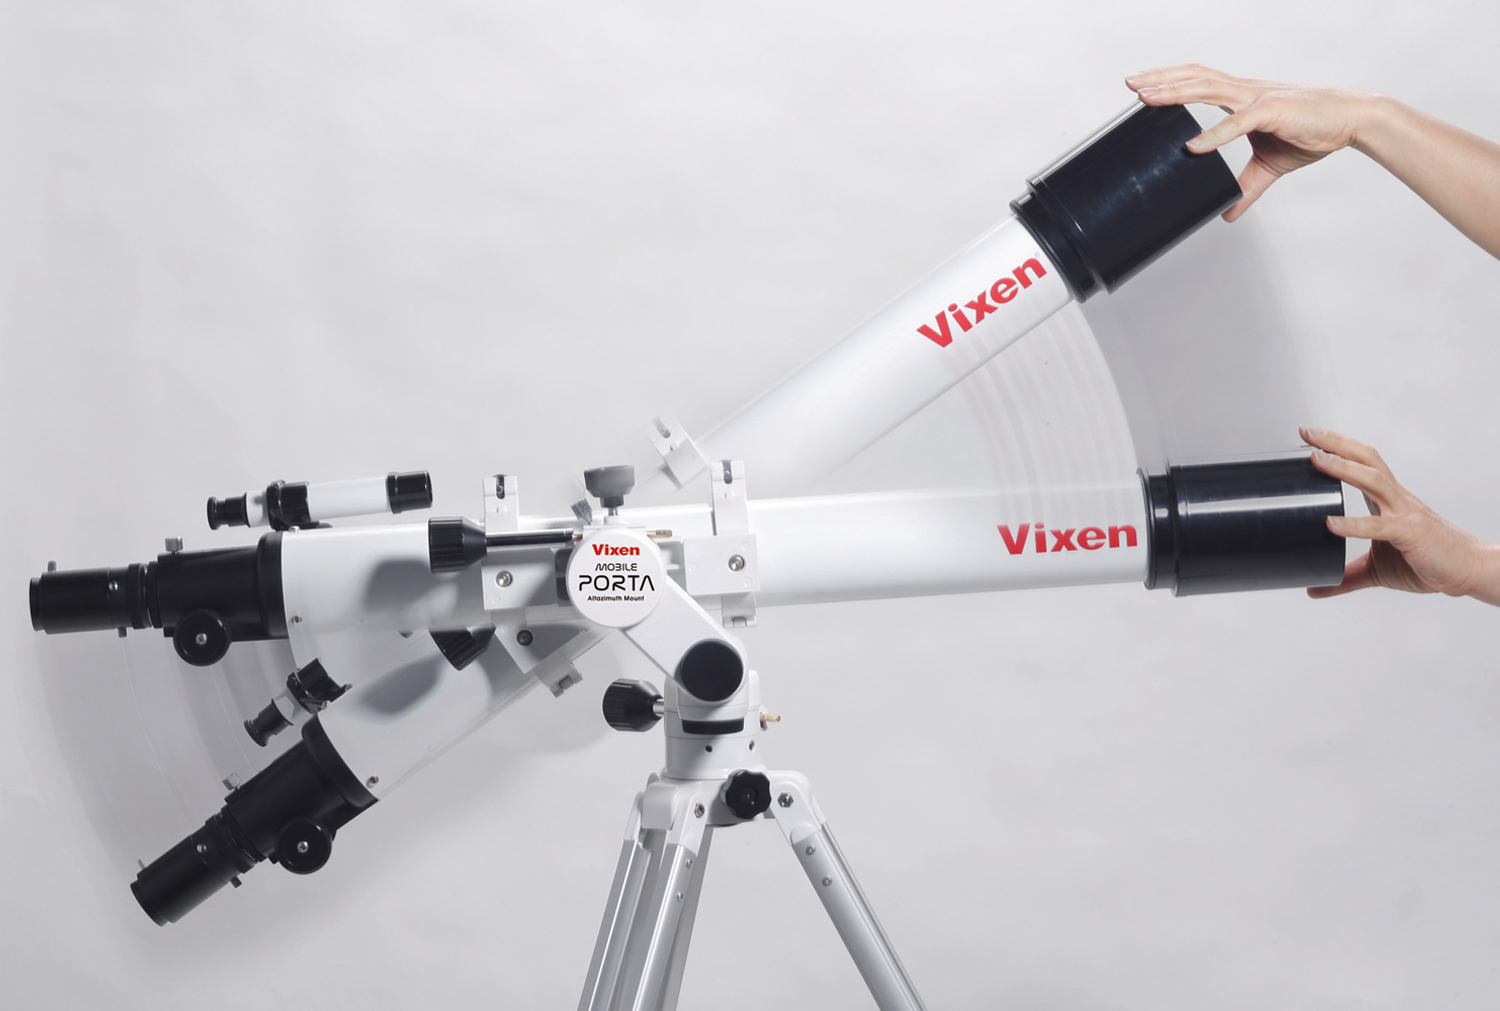 Vixen Mobile Porta A70Lf complete Telescope Set